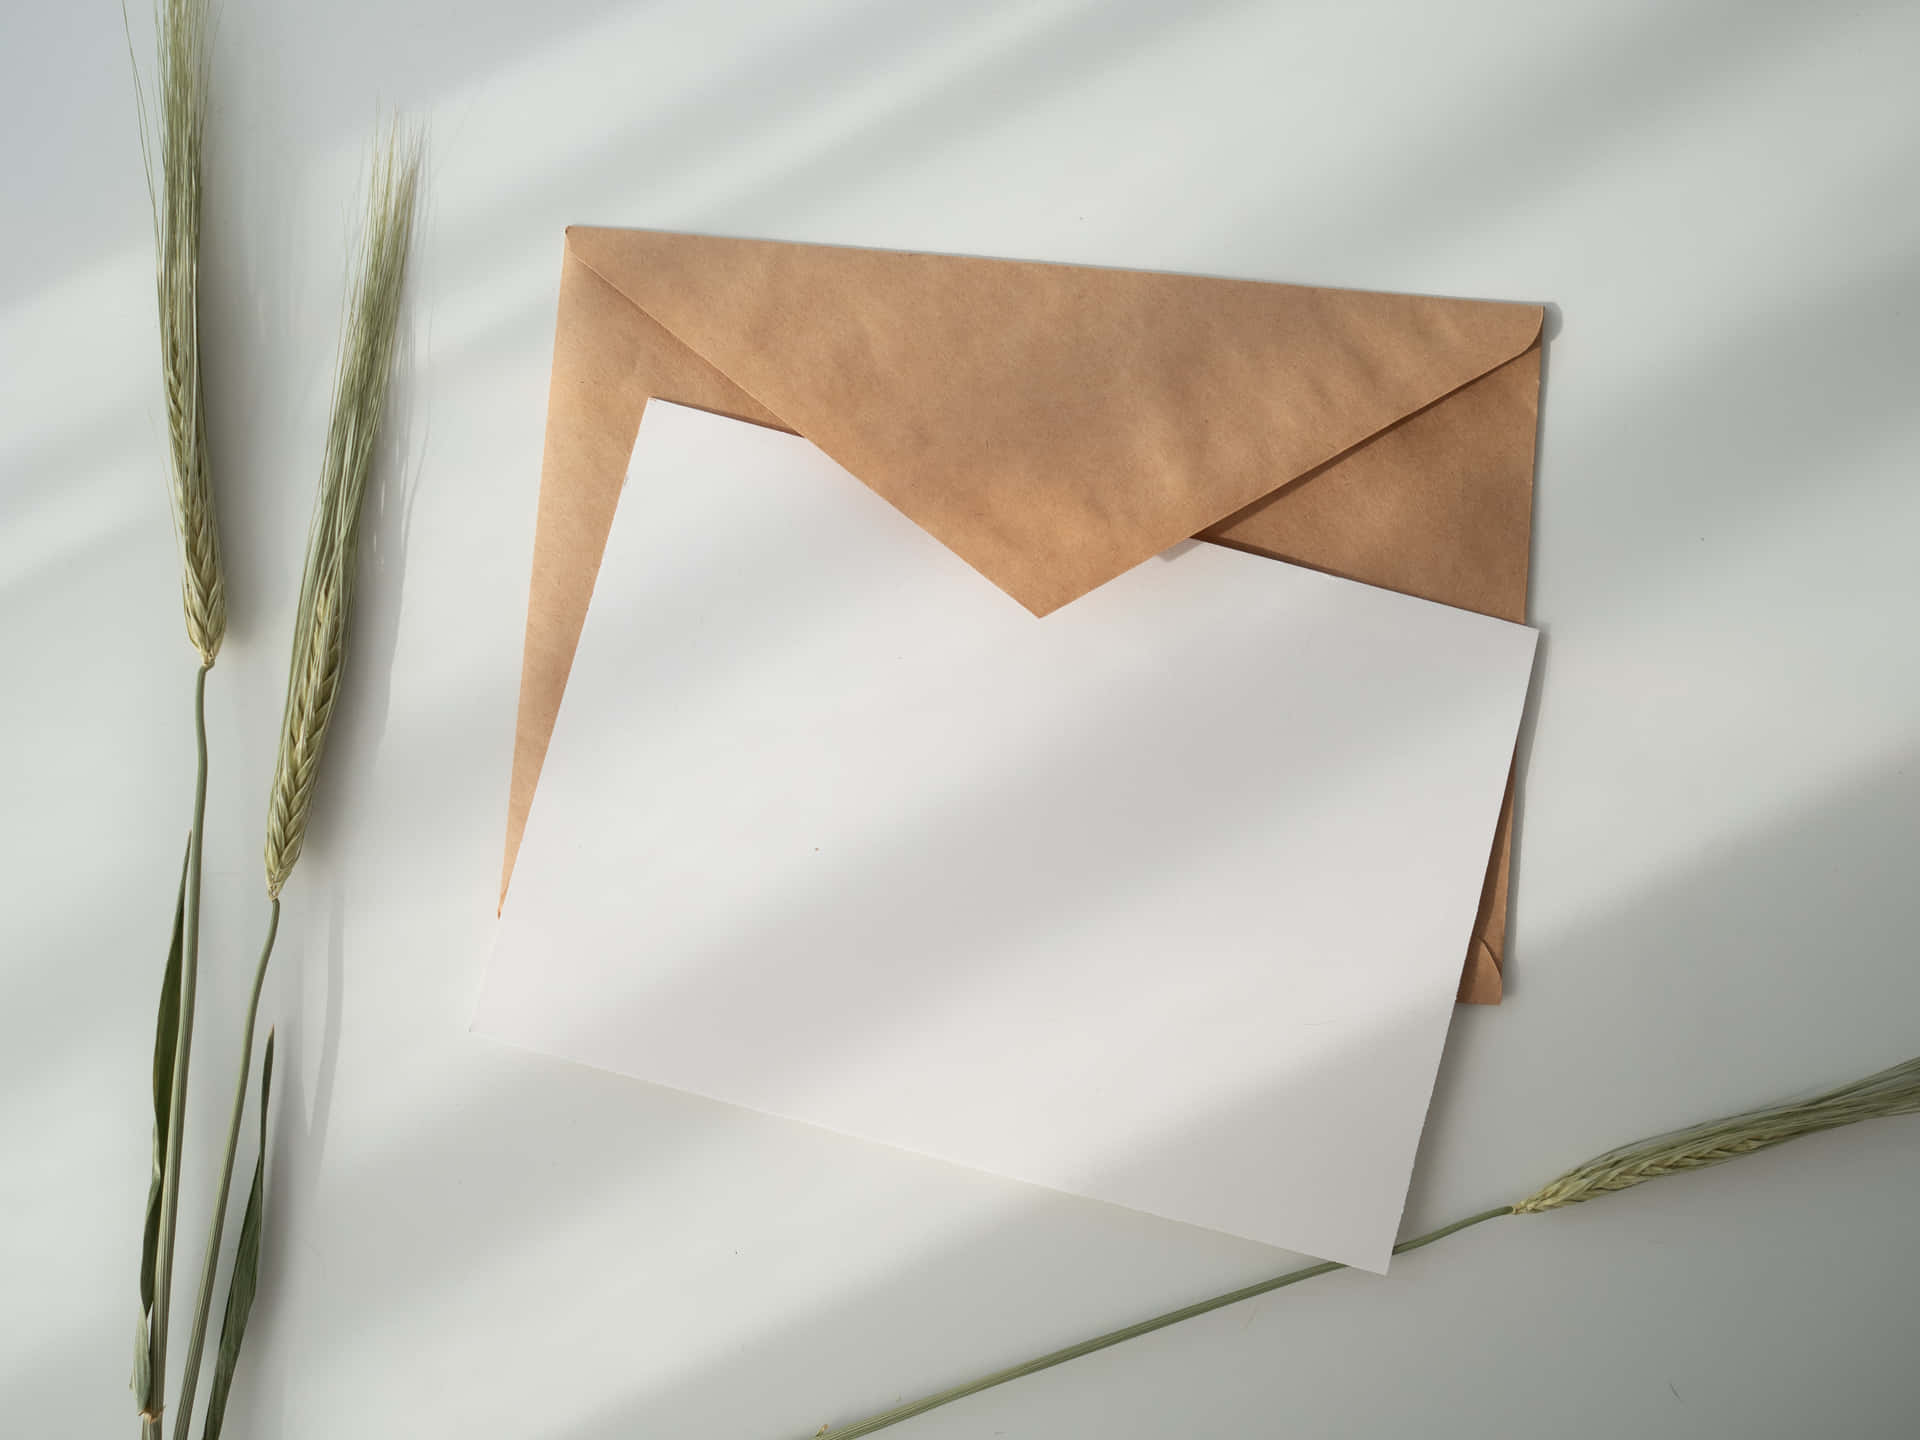 Print Paper On Envelope Background